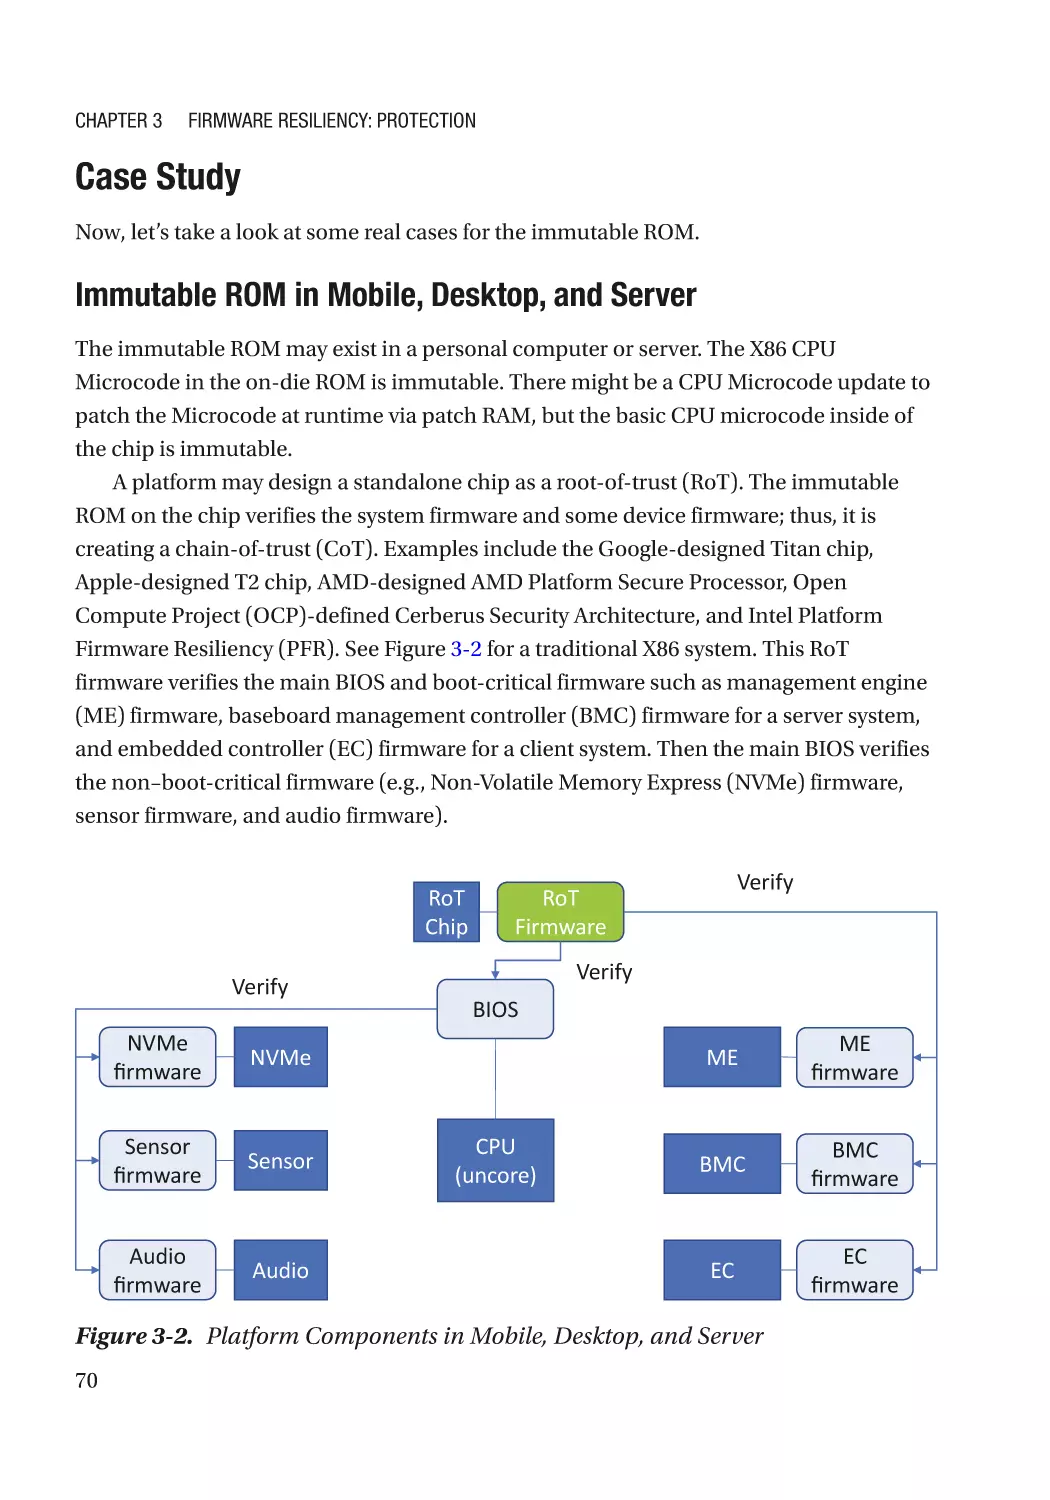 Case Study
Immutable ROM in Mobile, Desktop, and Server